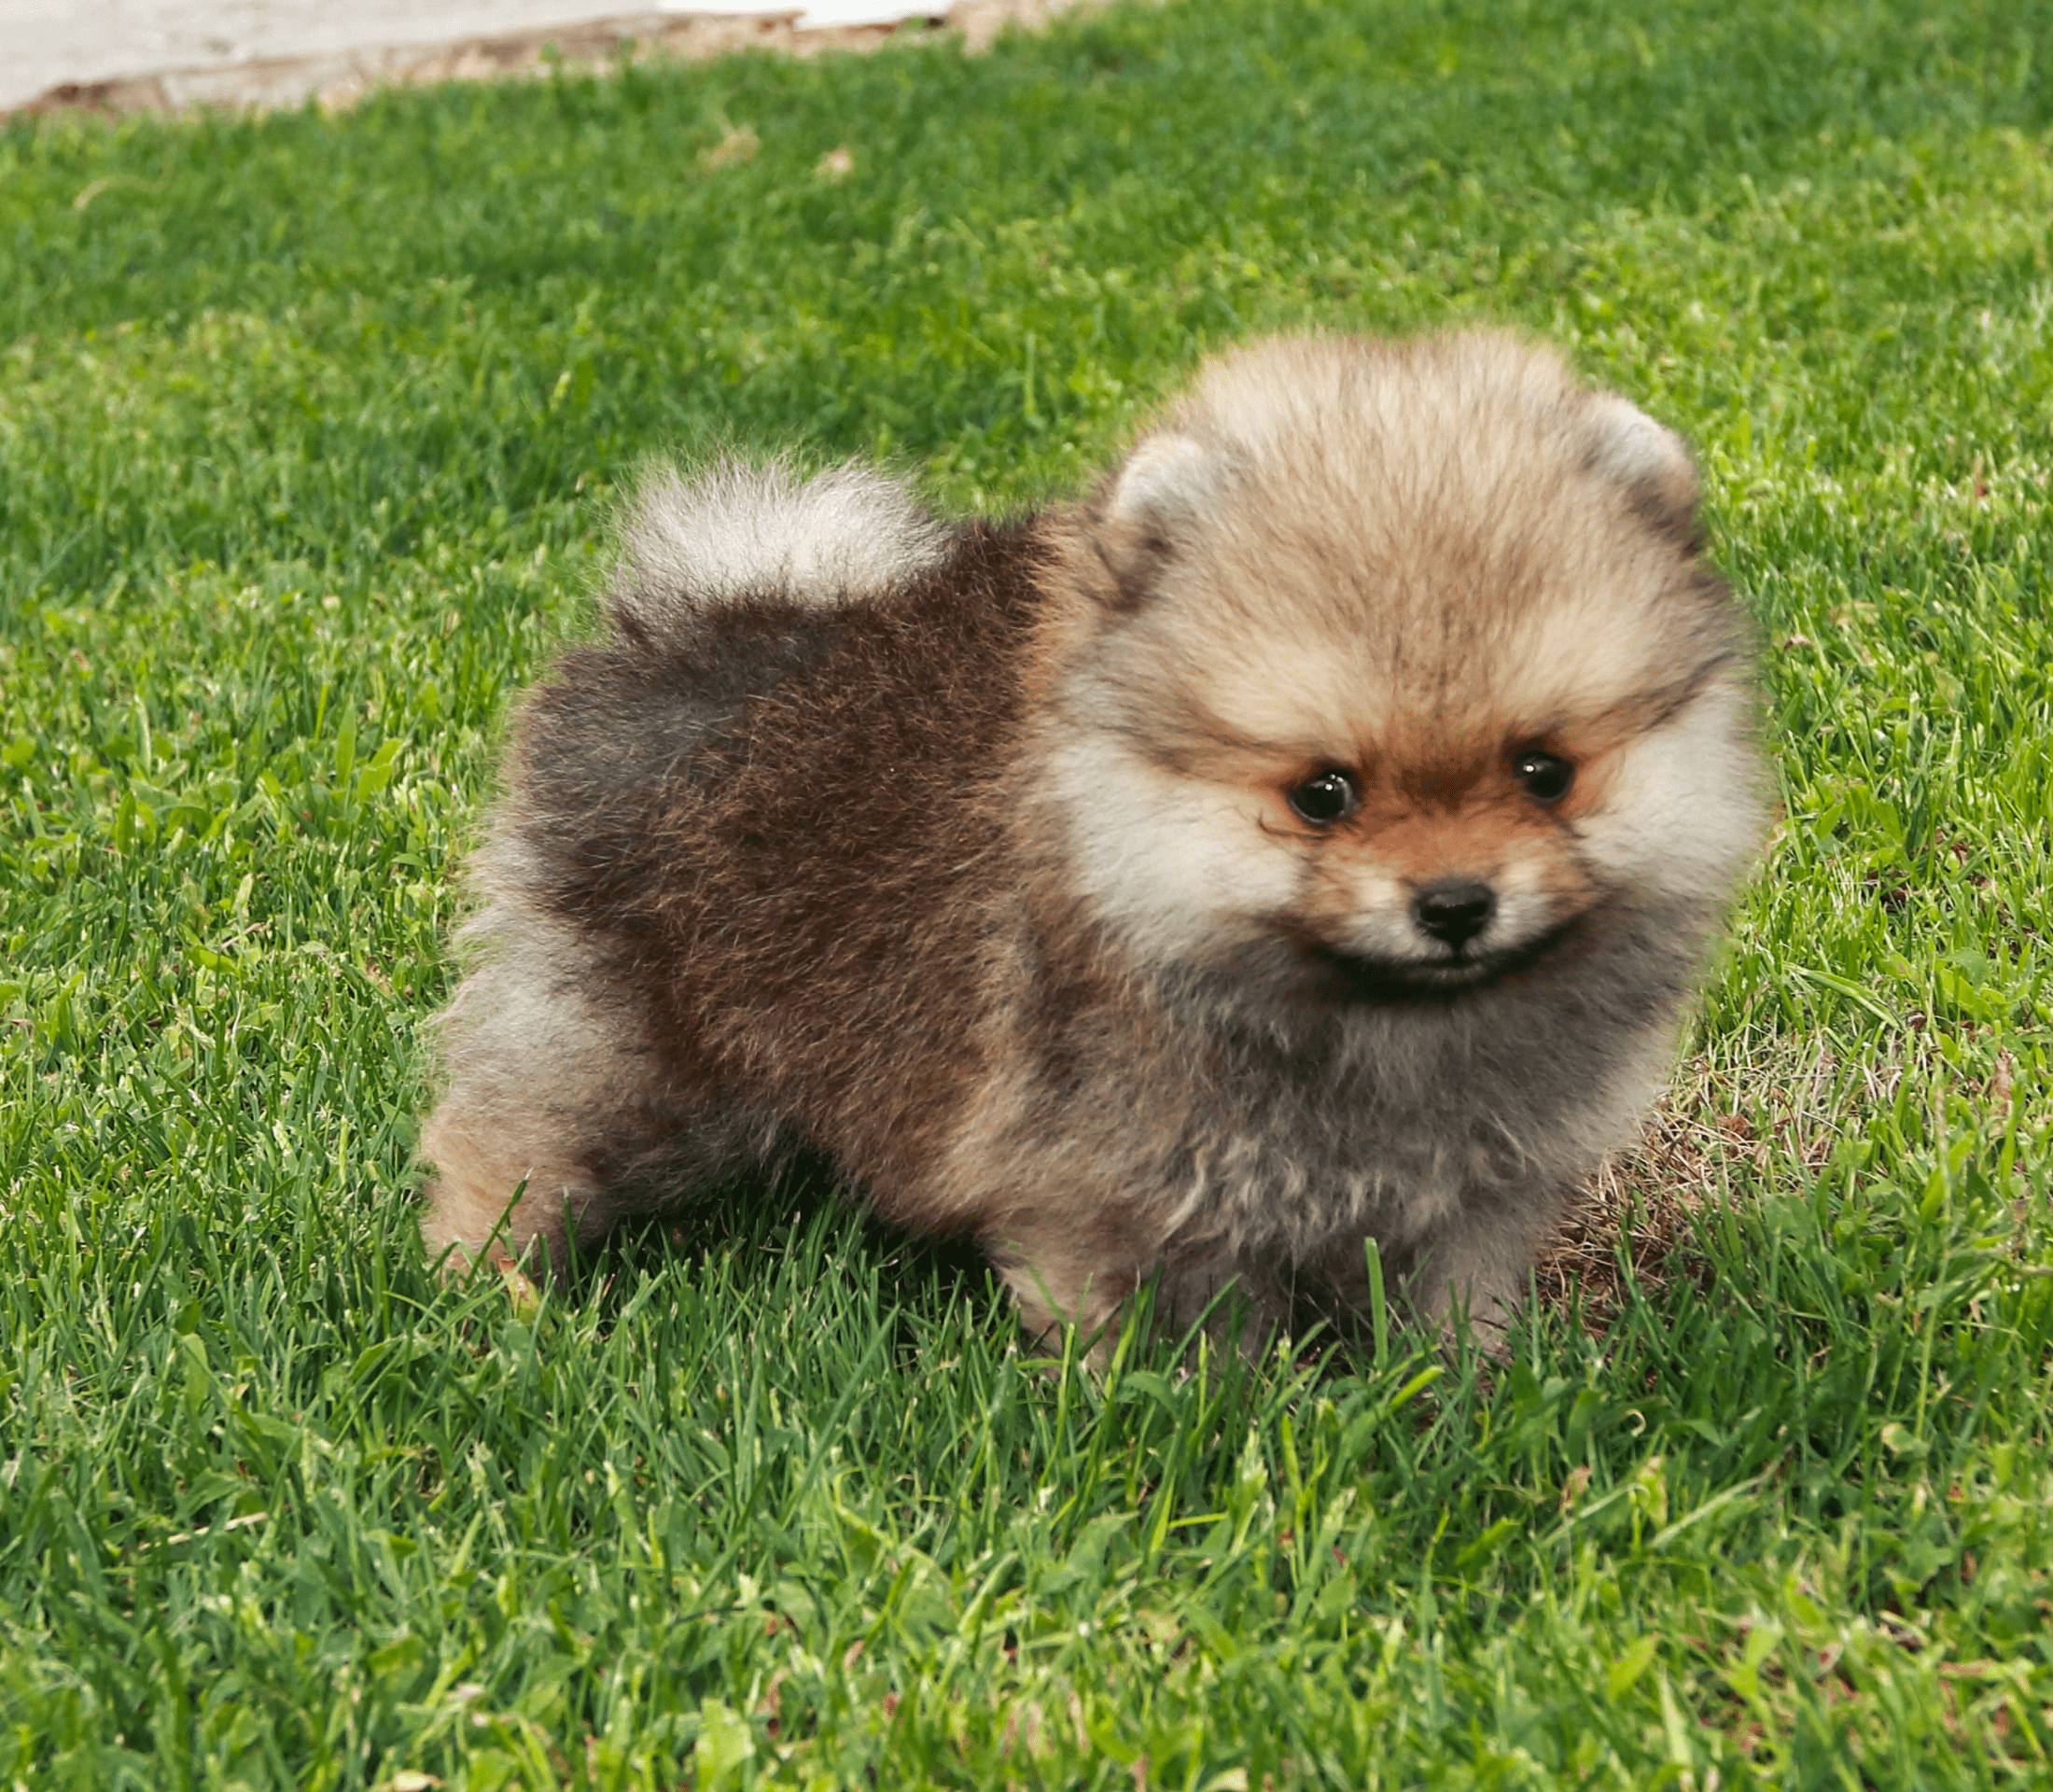 Brownish Pomeranian dog on a grassy yard